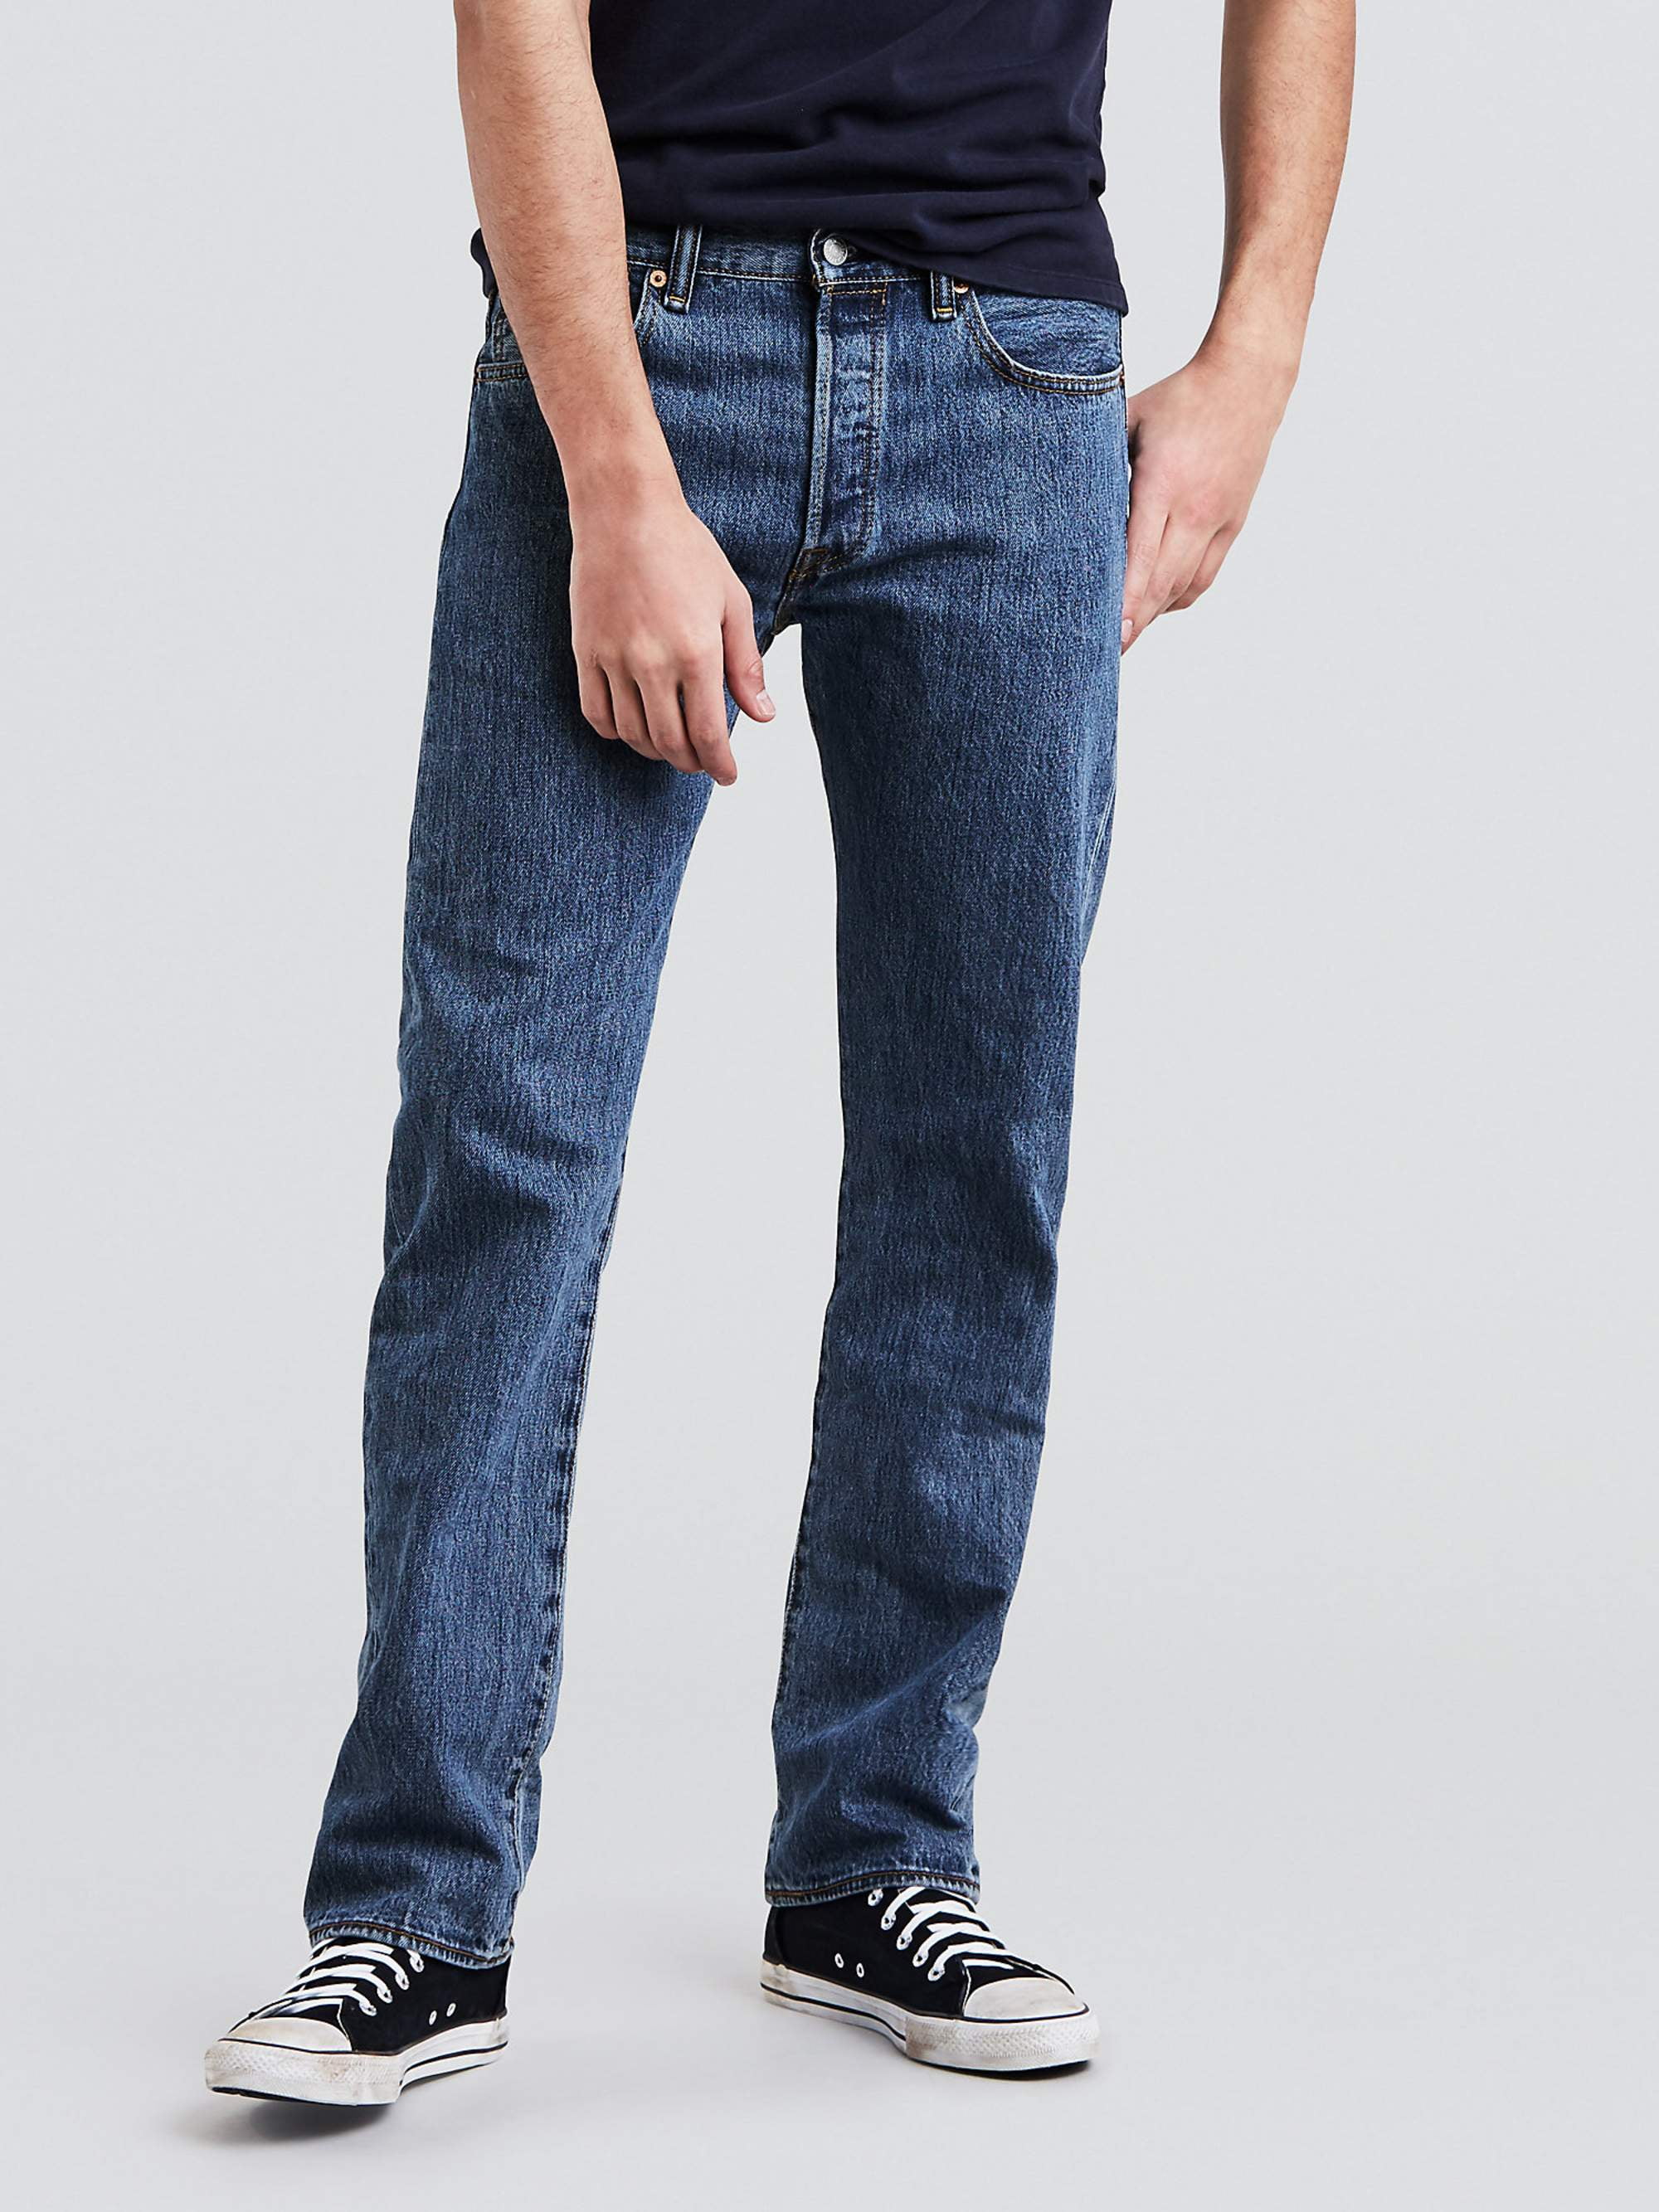 Verdorde Geld lenende Previs site Levi's Men's 501 Original Fit Jeans - Walmart.com